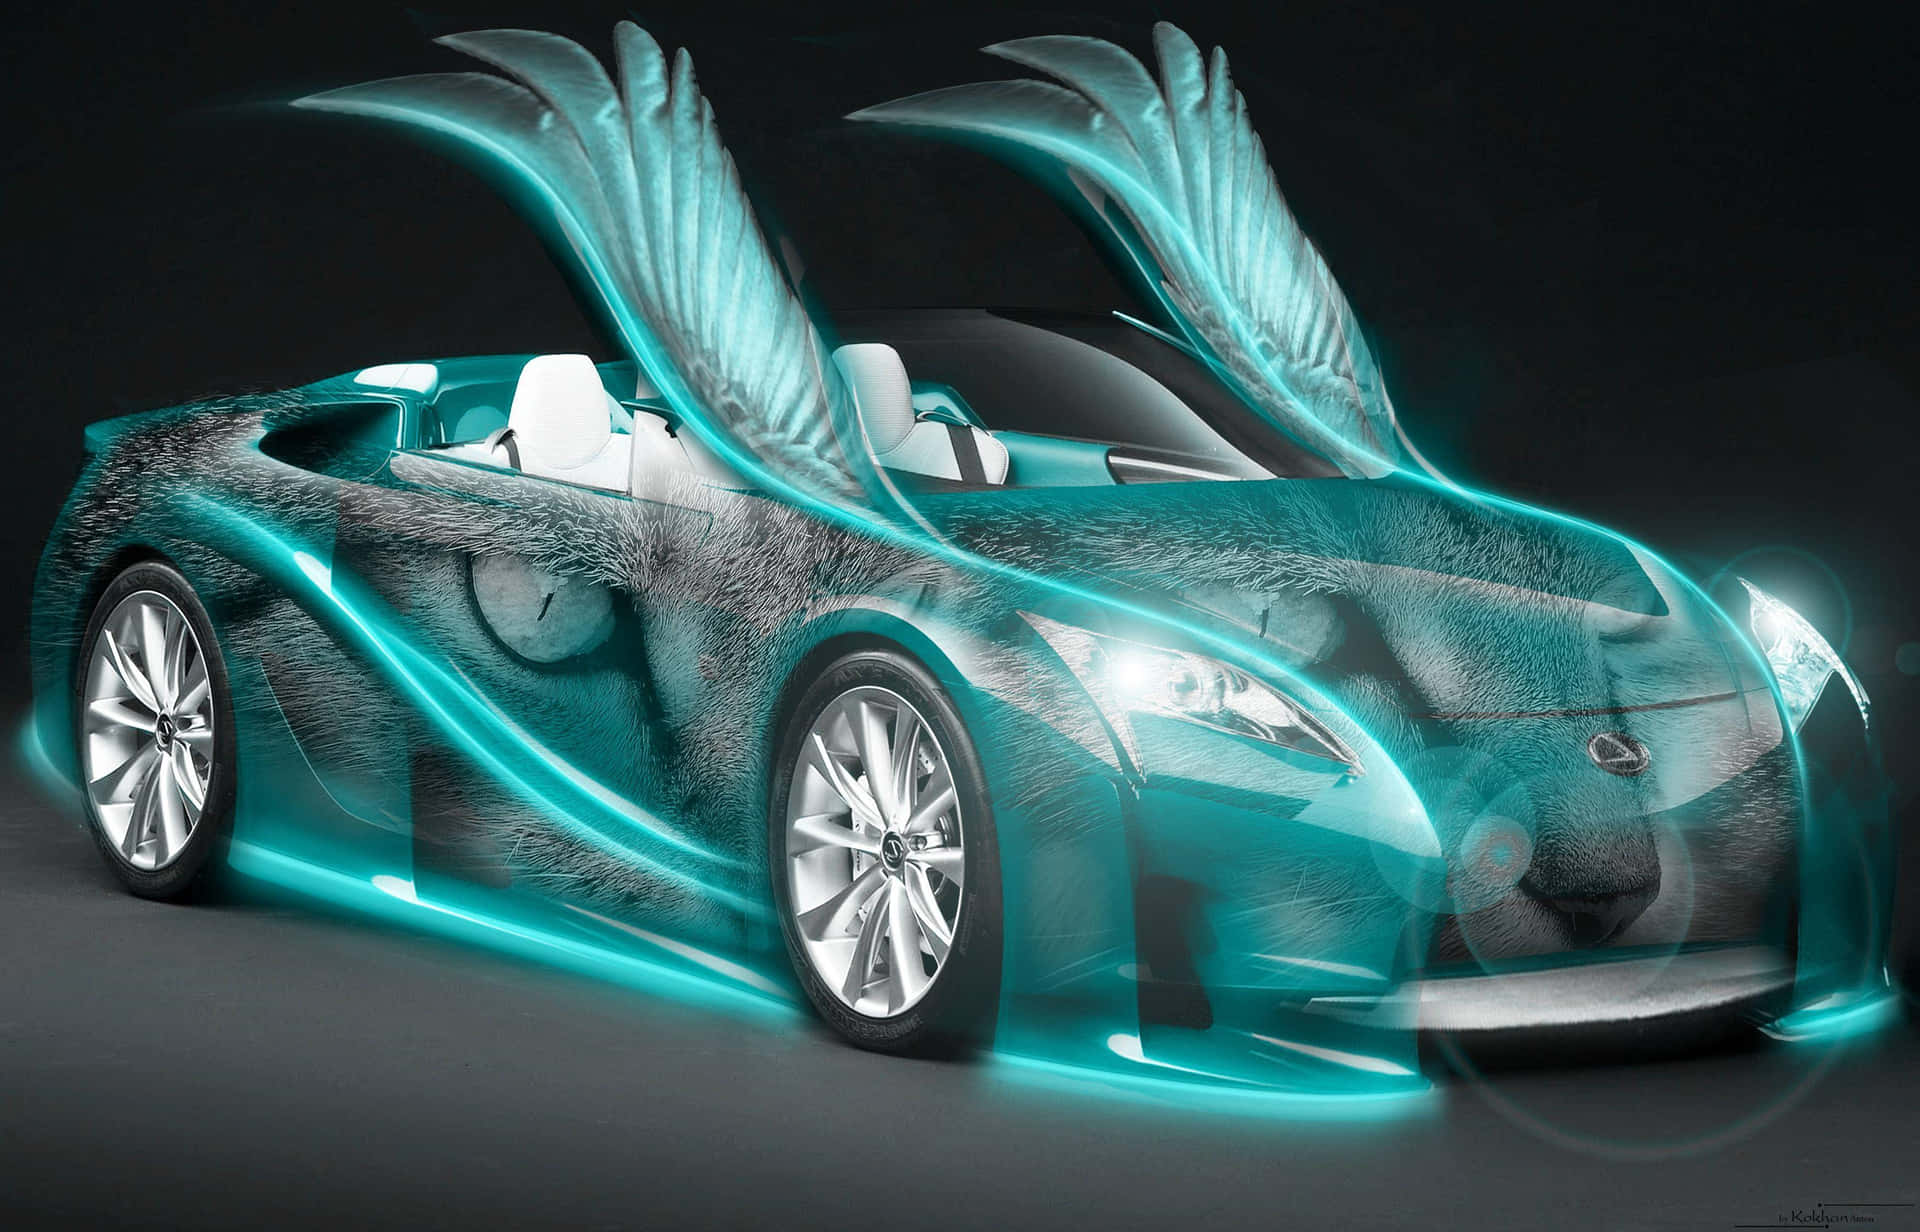 Experience the Vibrant Style of the Neon Bugatti Wallpaper